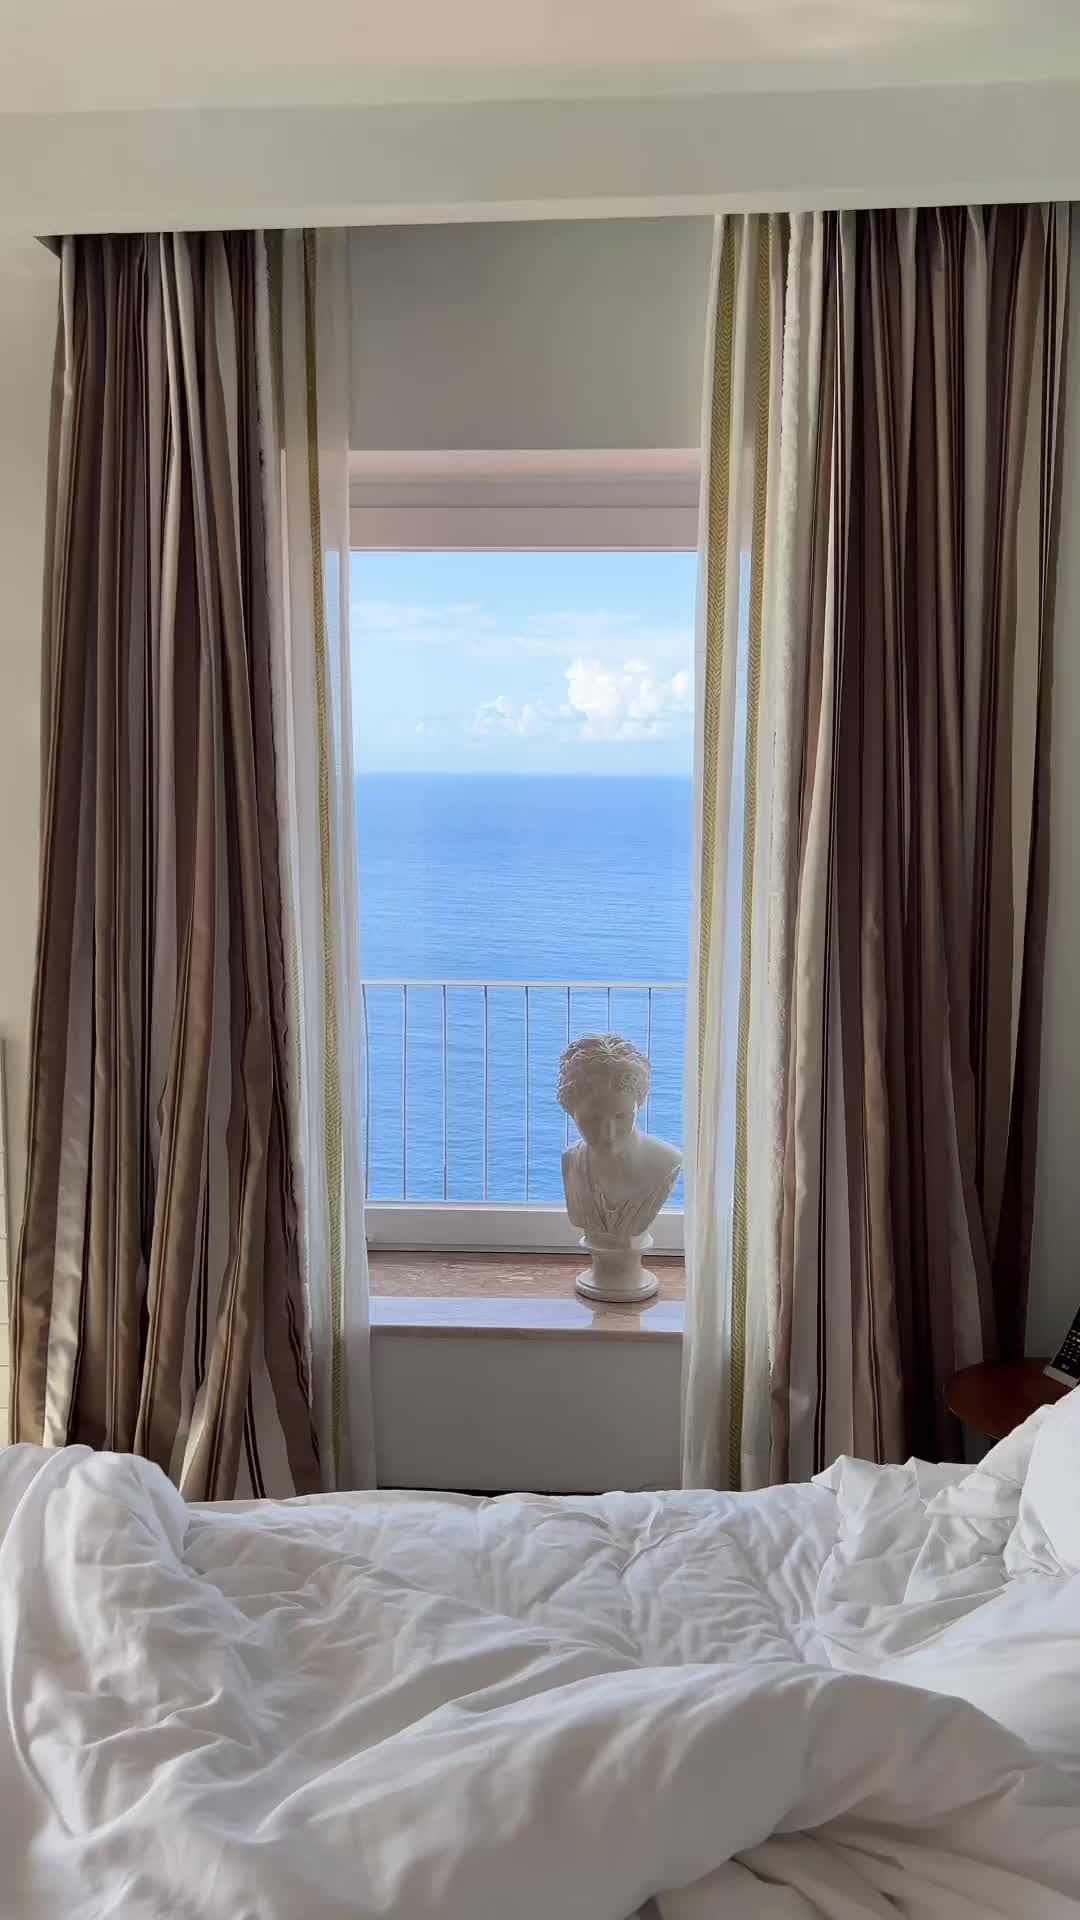 Breakfast with a View in Capri at Punta Tragara Hotel